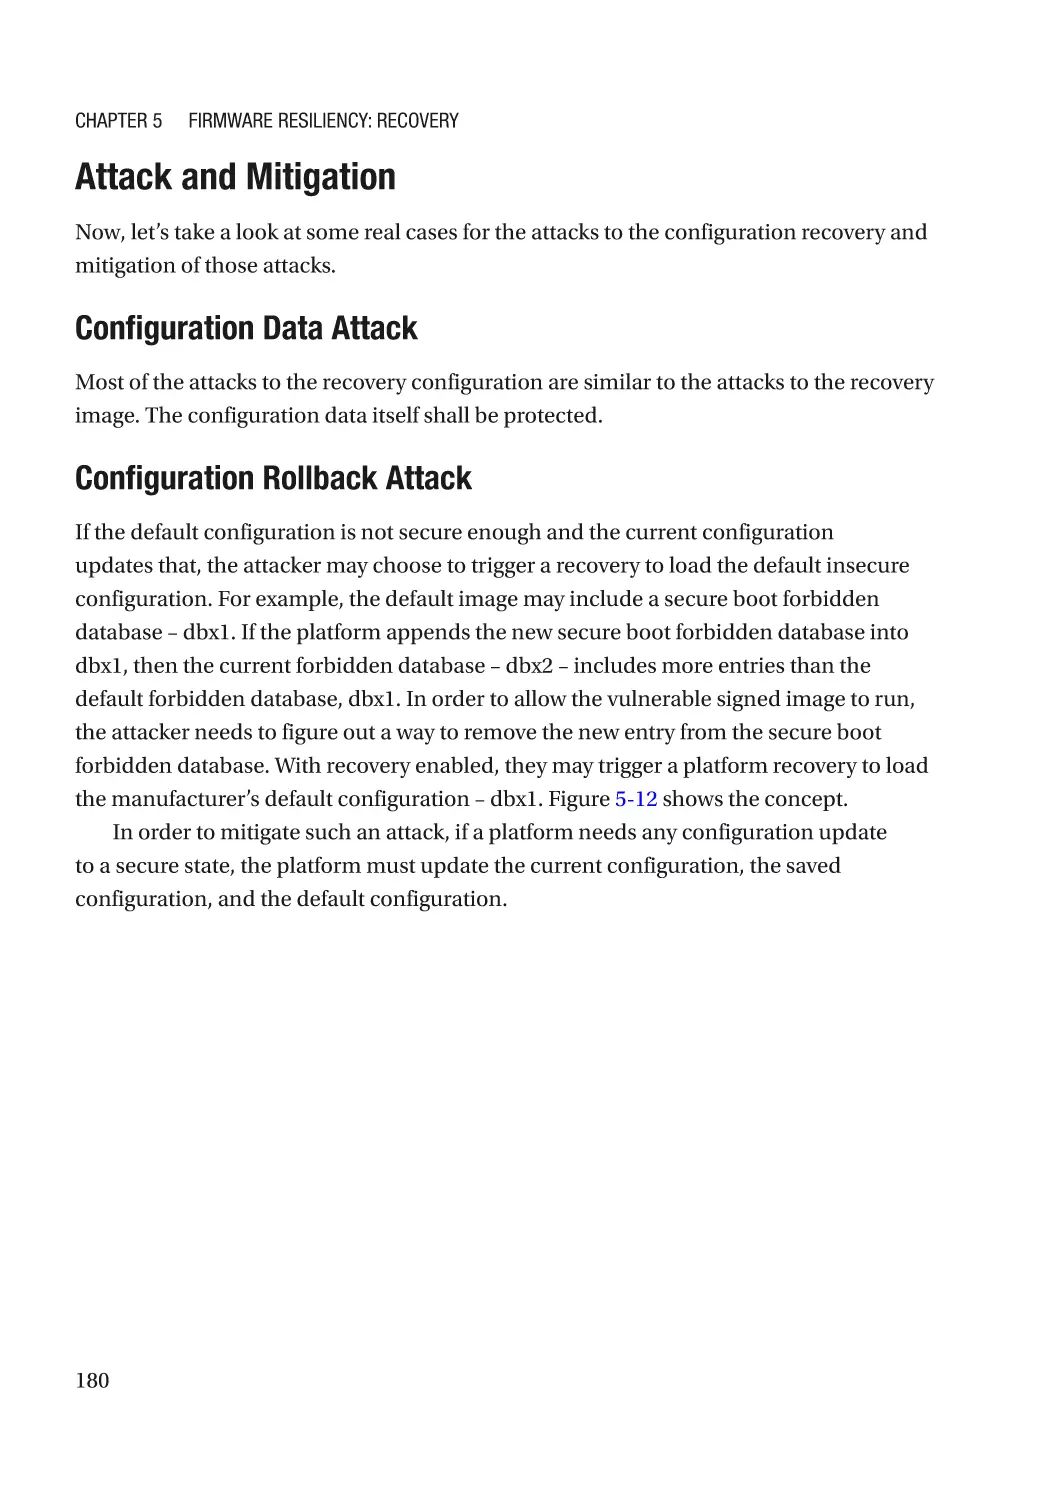 Attack and Mitigation
Configuration Data Attack
Configuration Rollback Attack